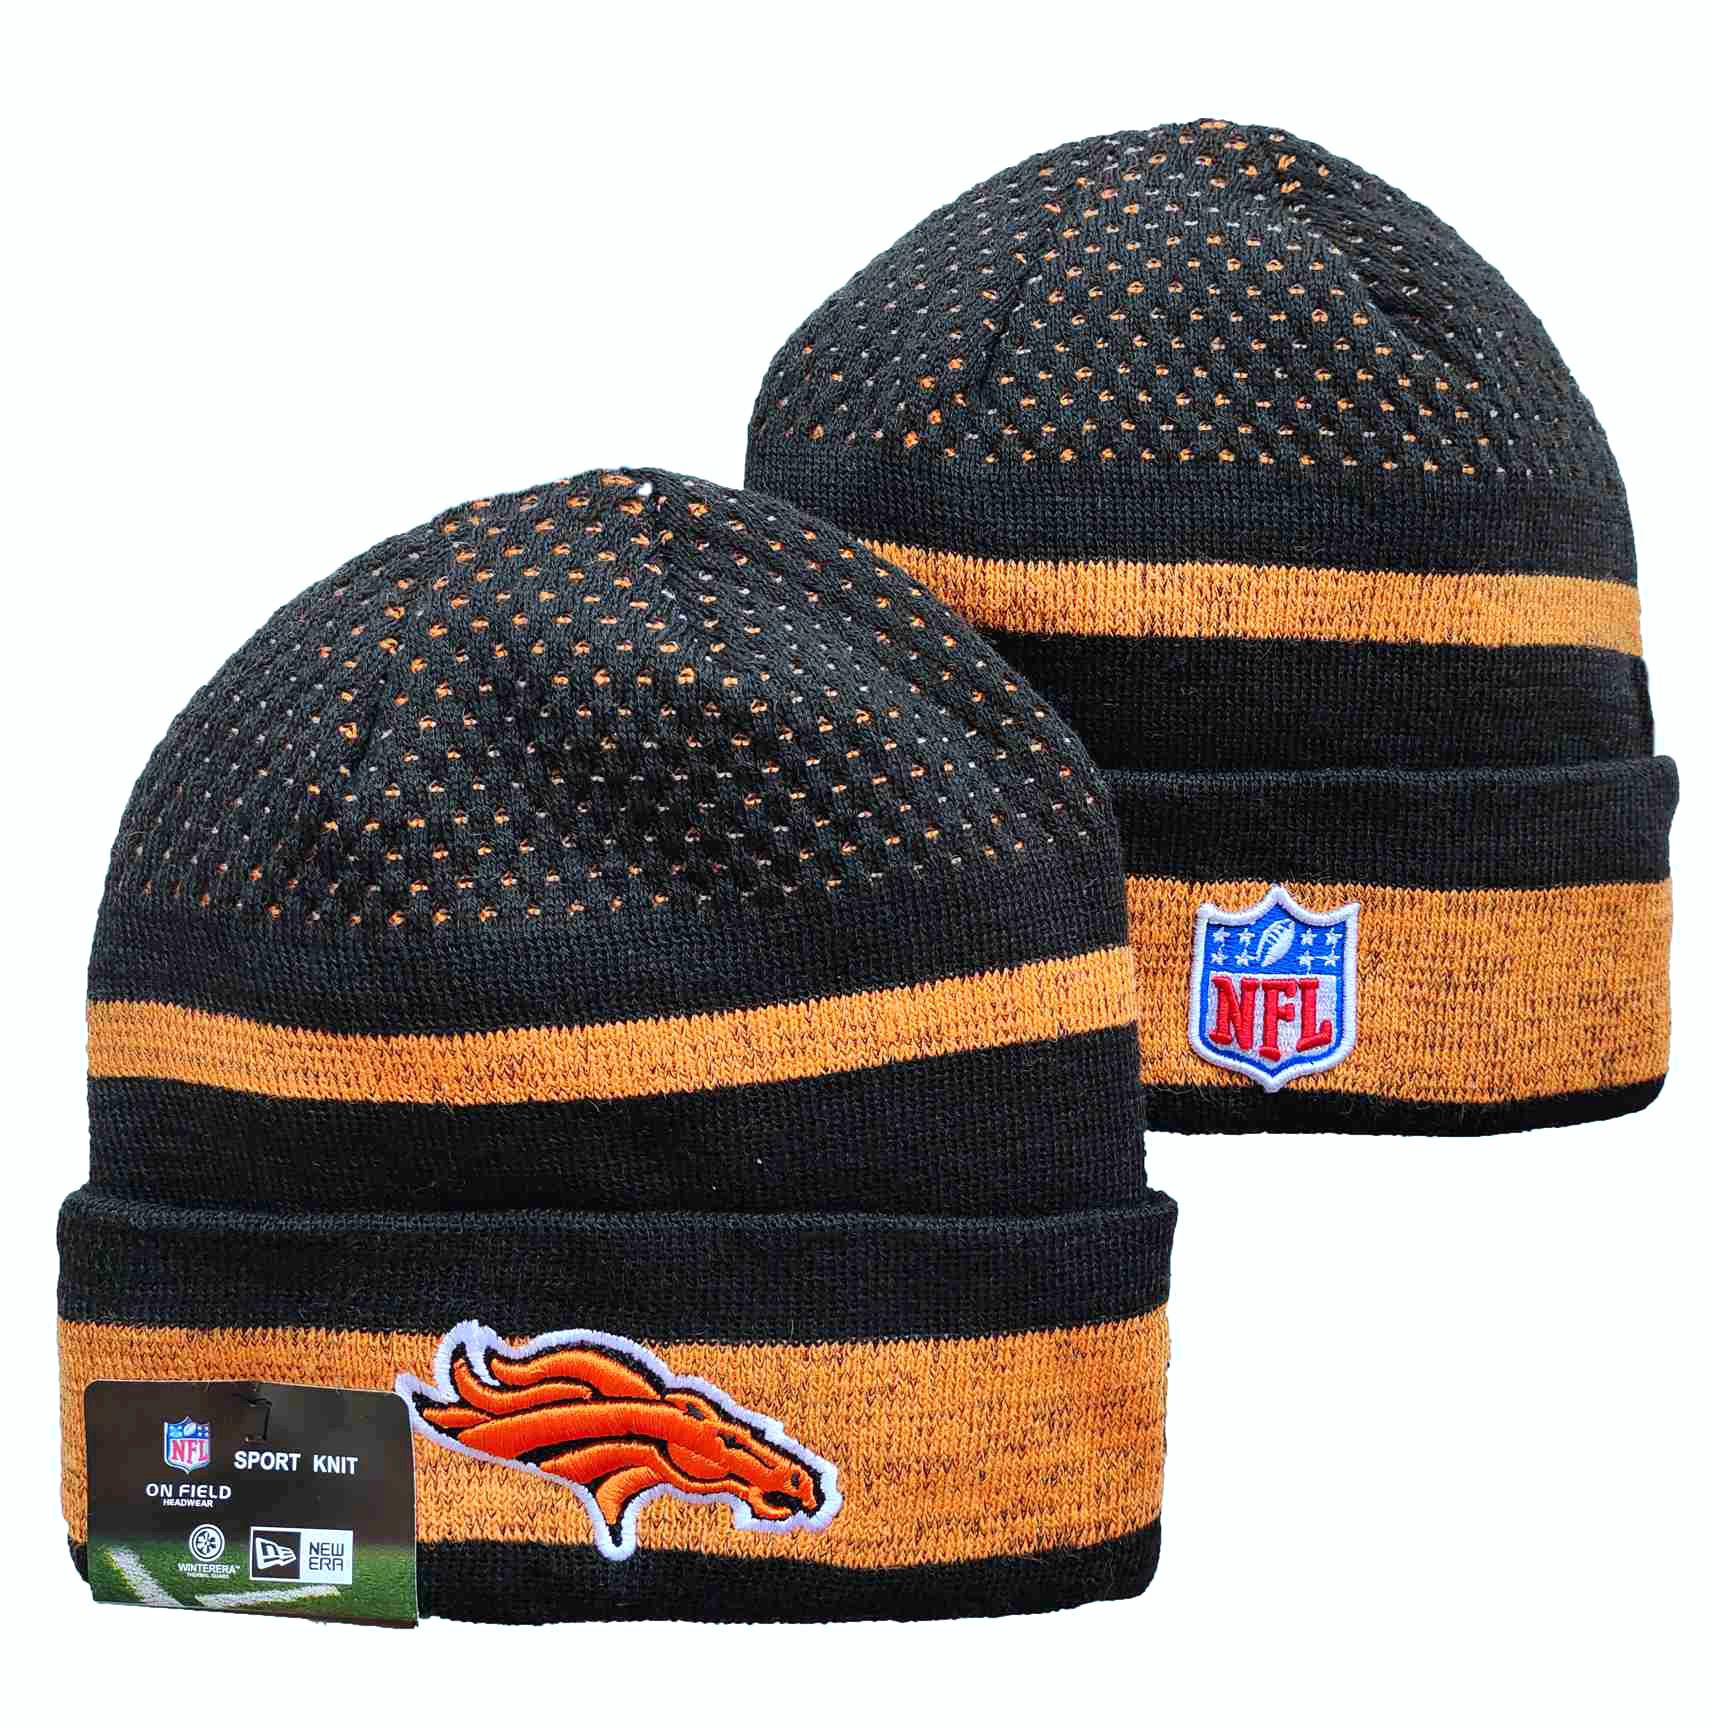 NFL Denver Broncos Beanies Knit Hats-YD930